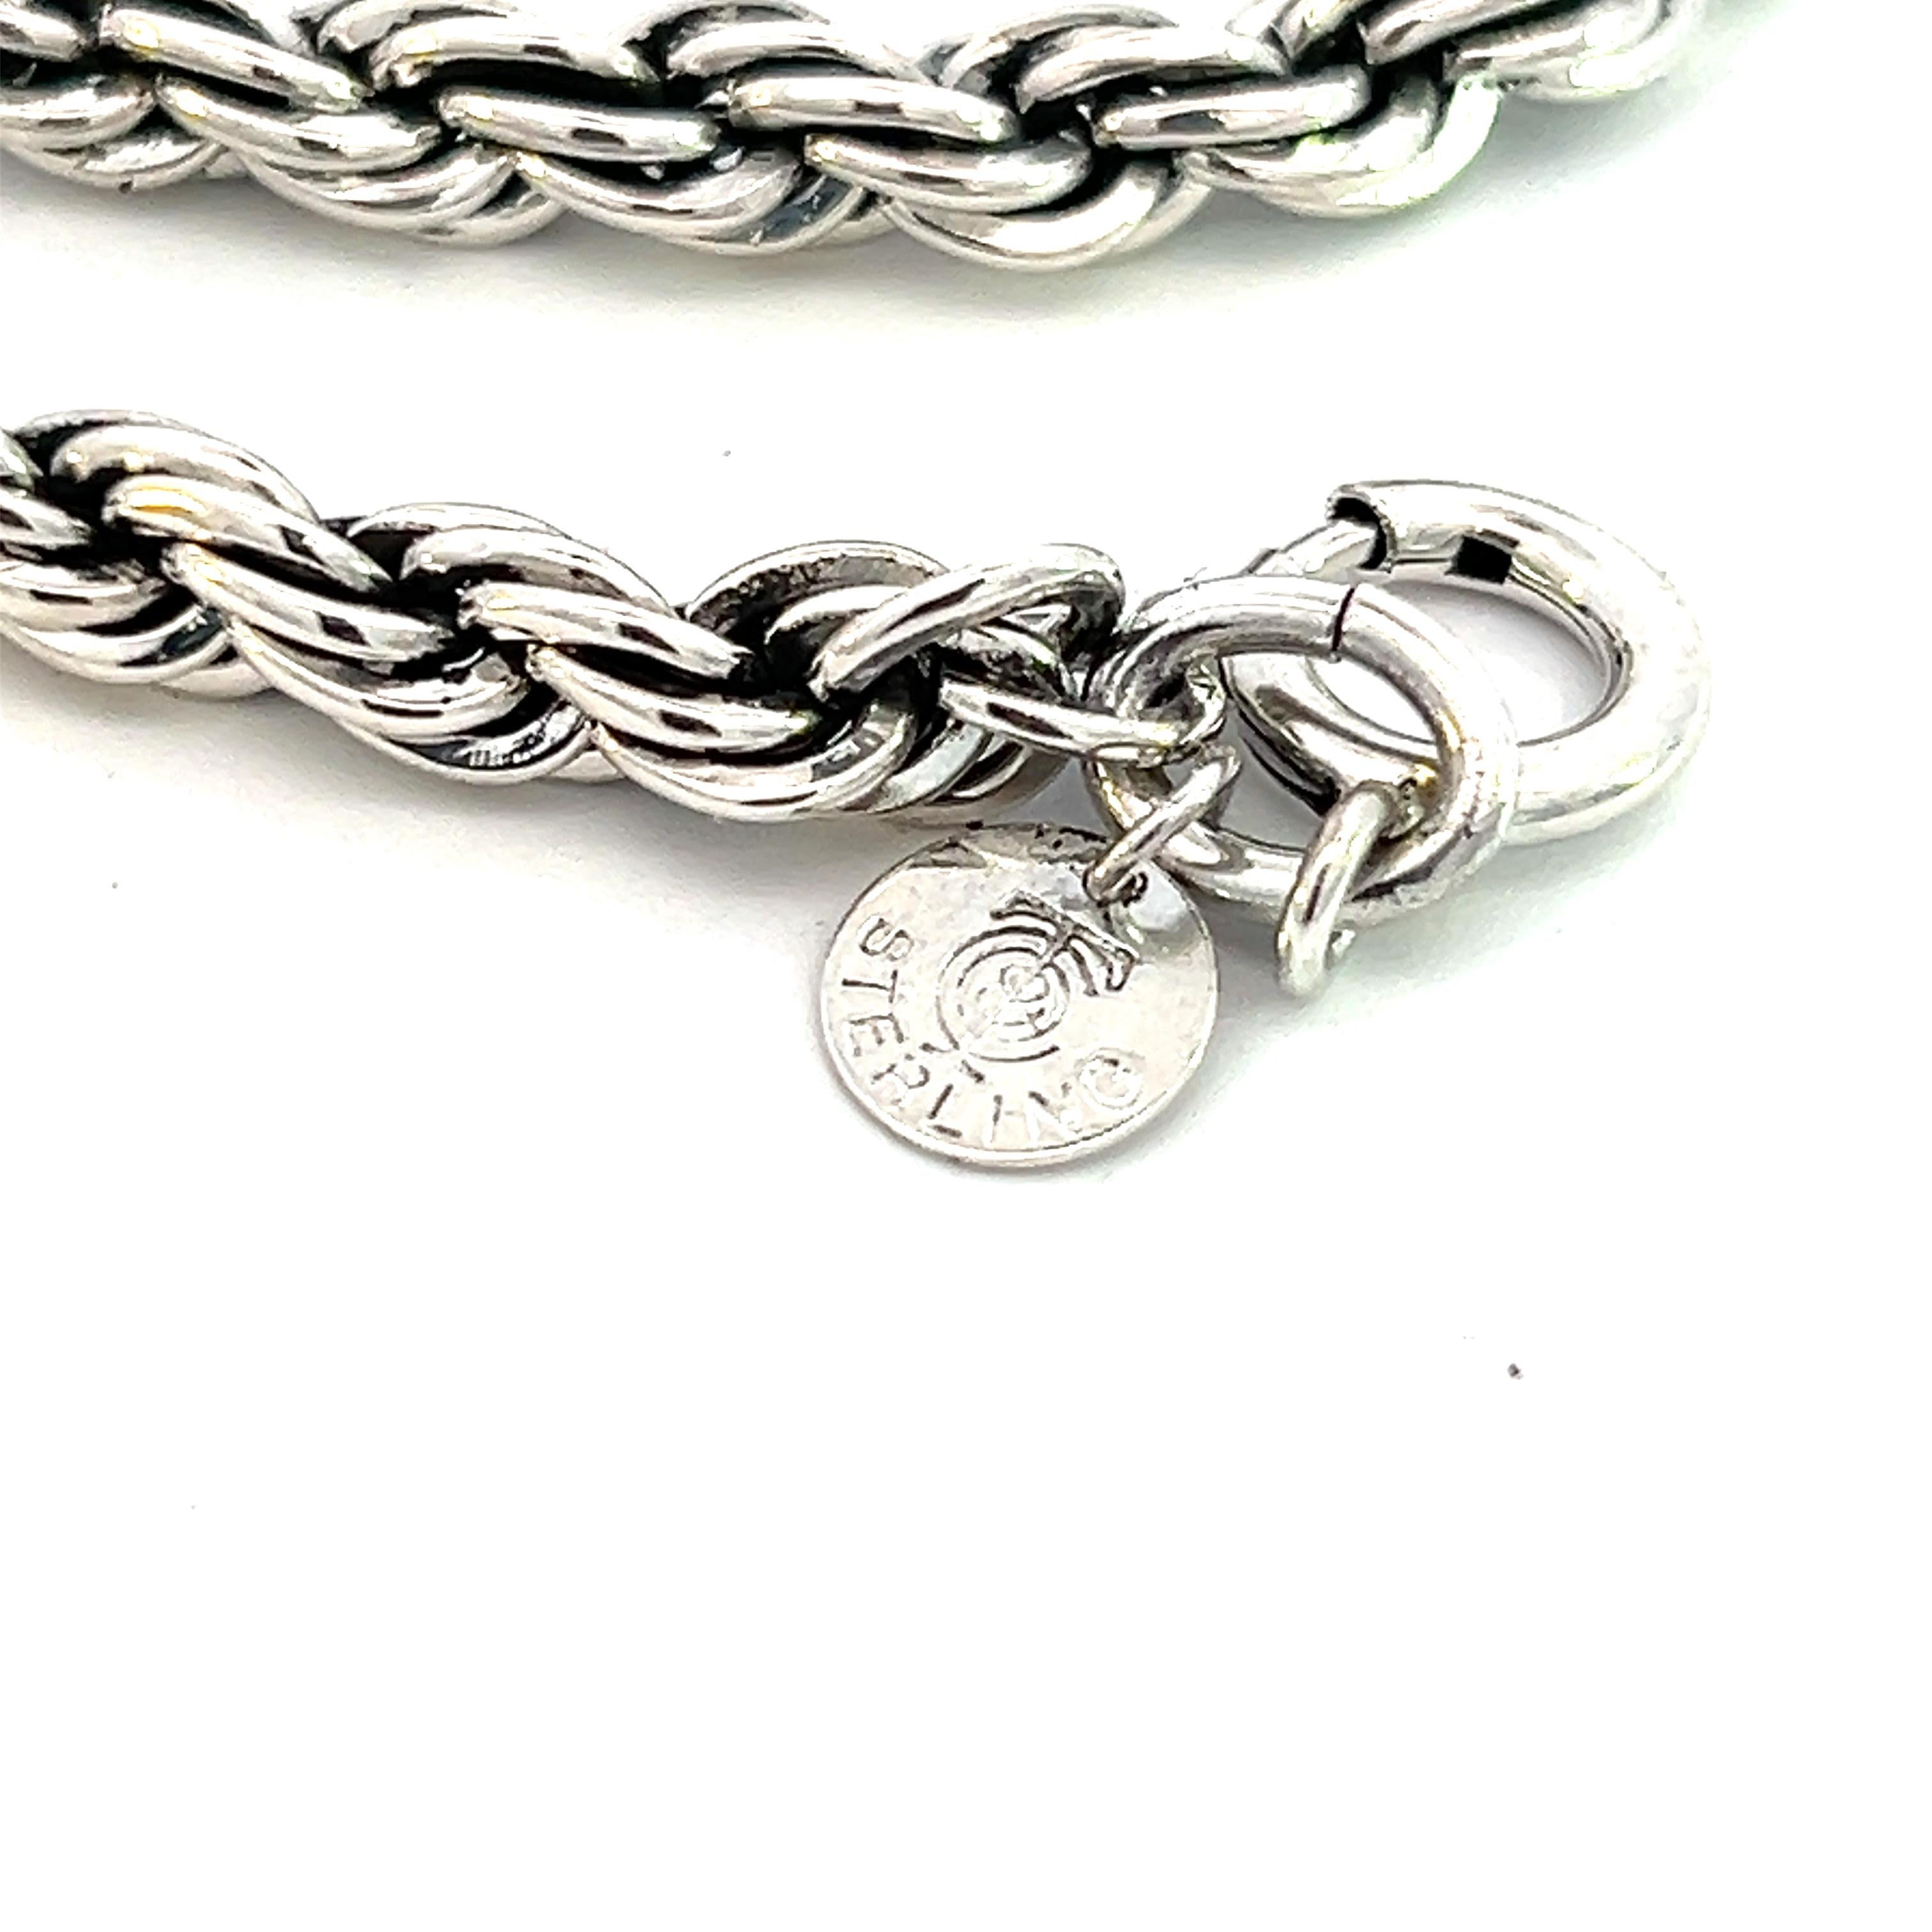 Tiffany & Co Estate Rope Chain Bracelet 8